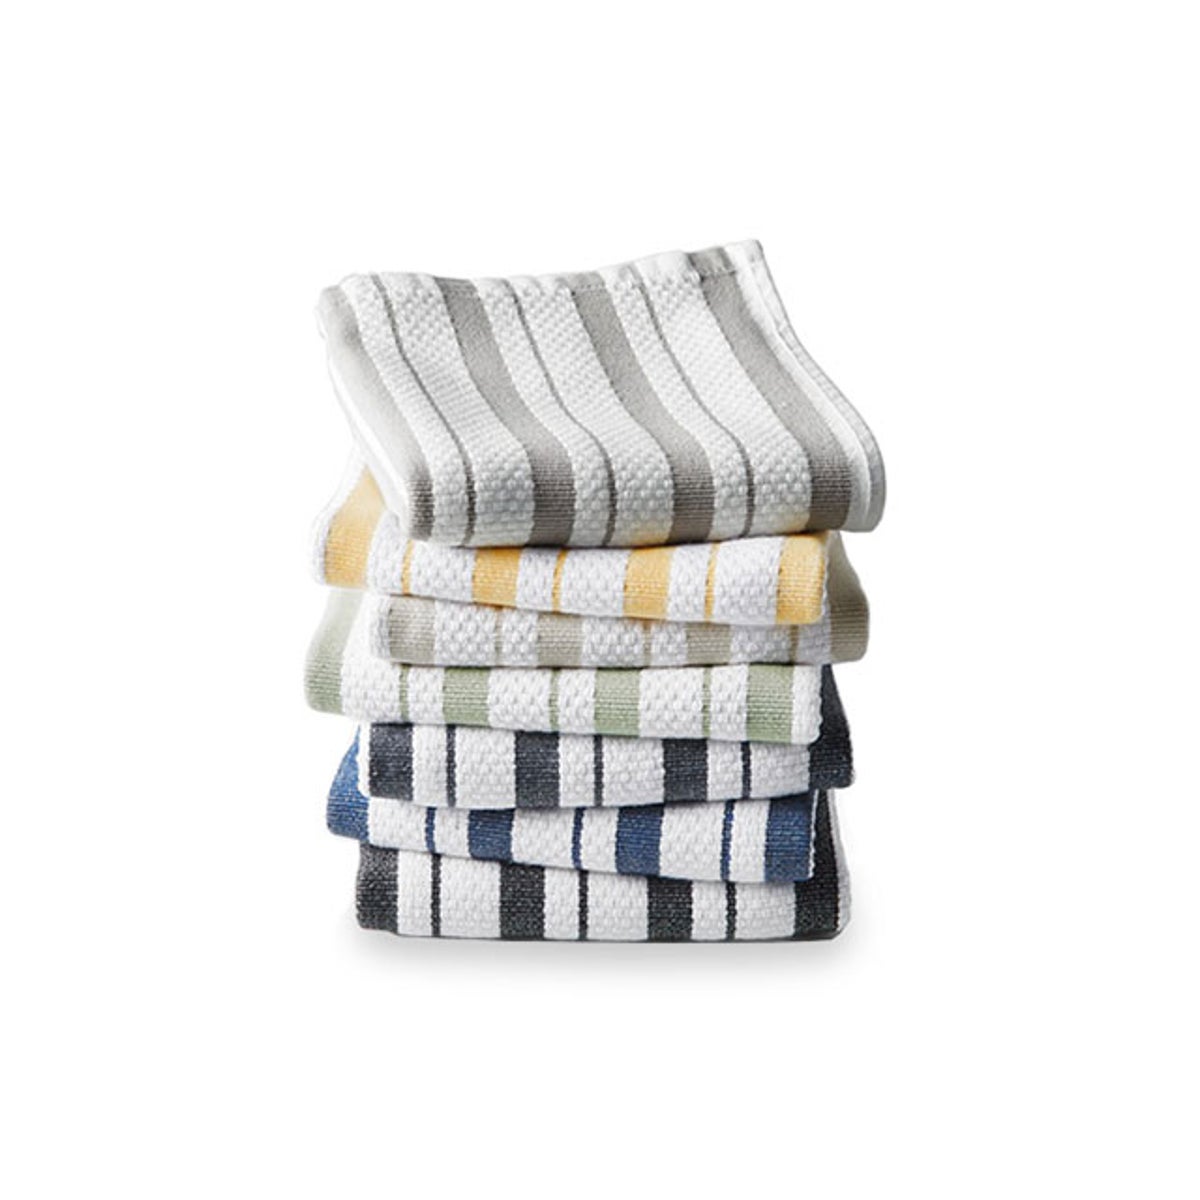 https://www.saveur.com/uploads/2019/09/20/Best-Kitchen-Towels-Option_-Williams-Sonoma-Classic-Stripe-Towels-.jpg?auto=webp